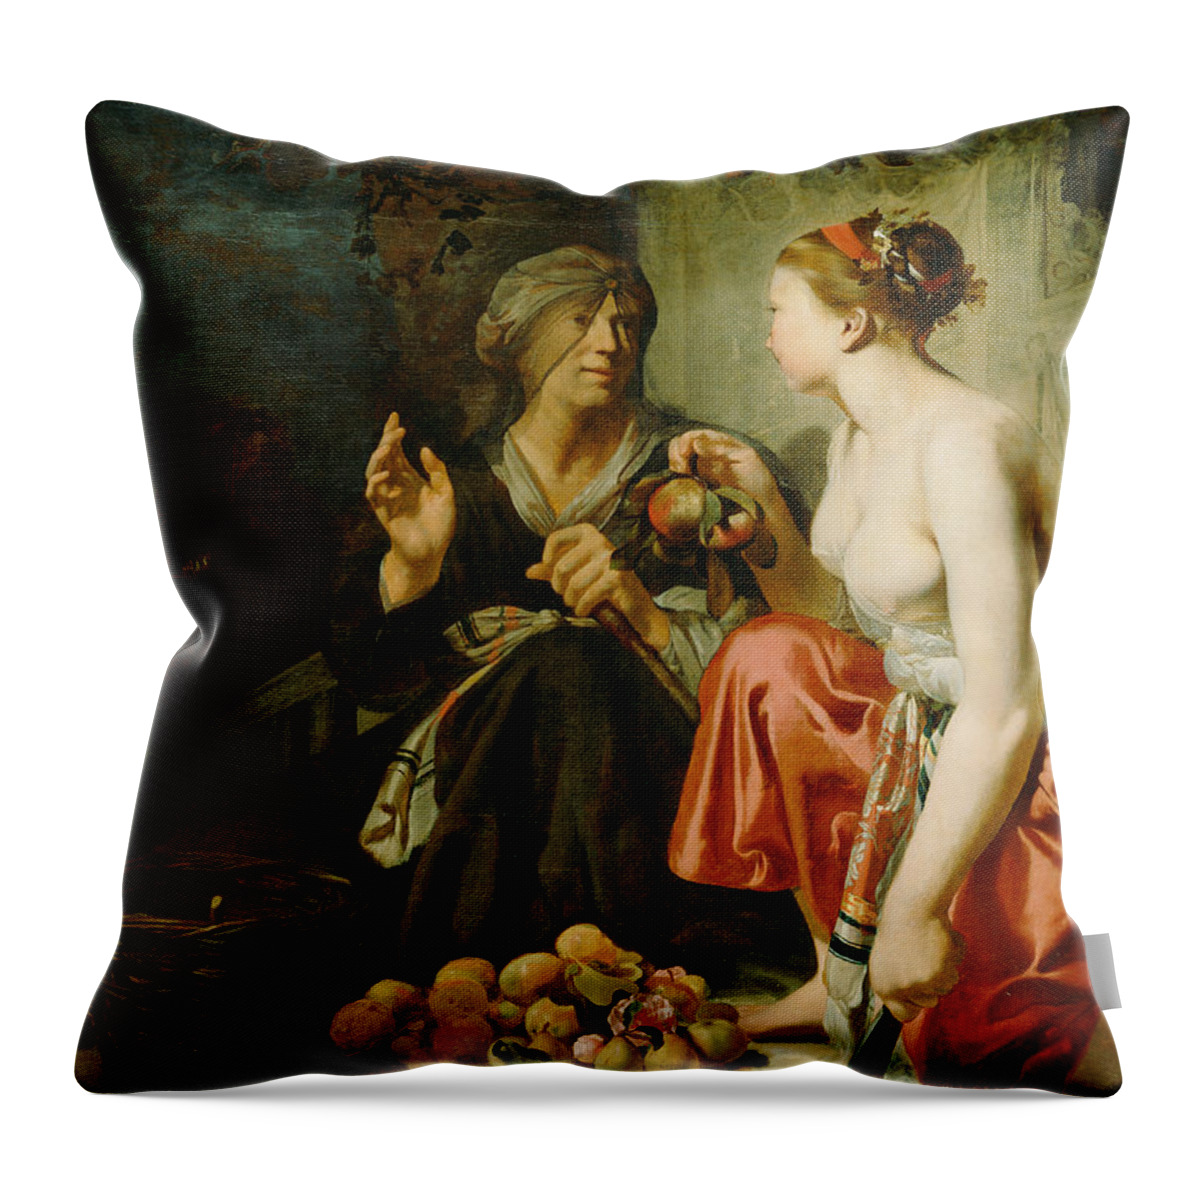 Attributed To Caesar Van Everdingen Throw Pillow featuring the painting Vertumnus and Pomona by Attributed to Caesar van Everdingen